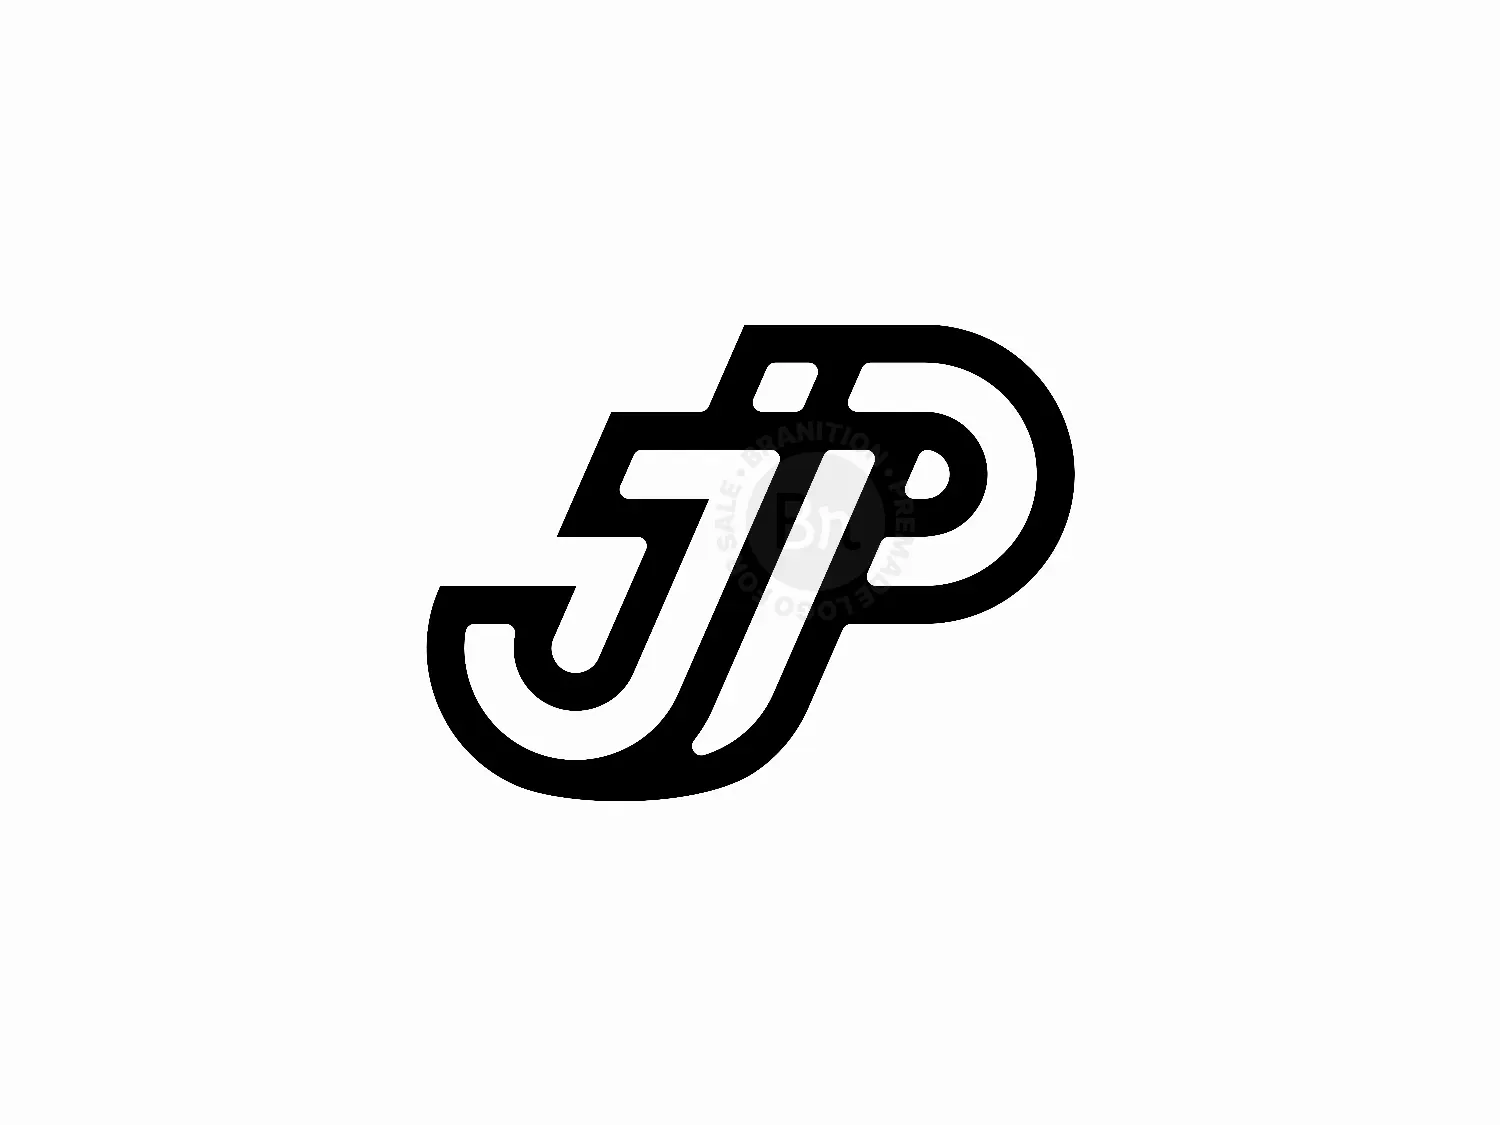 Pj letter logo design Stock Vector Images - Page 3 - Alamy